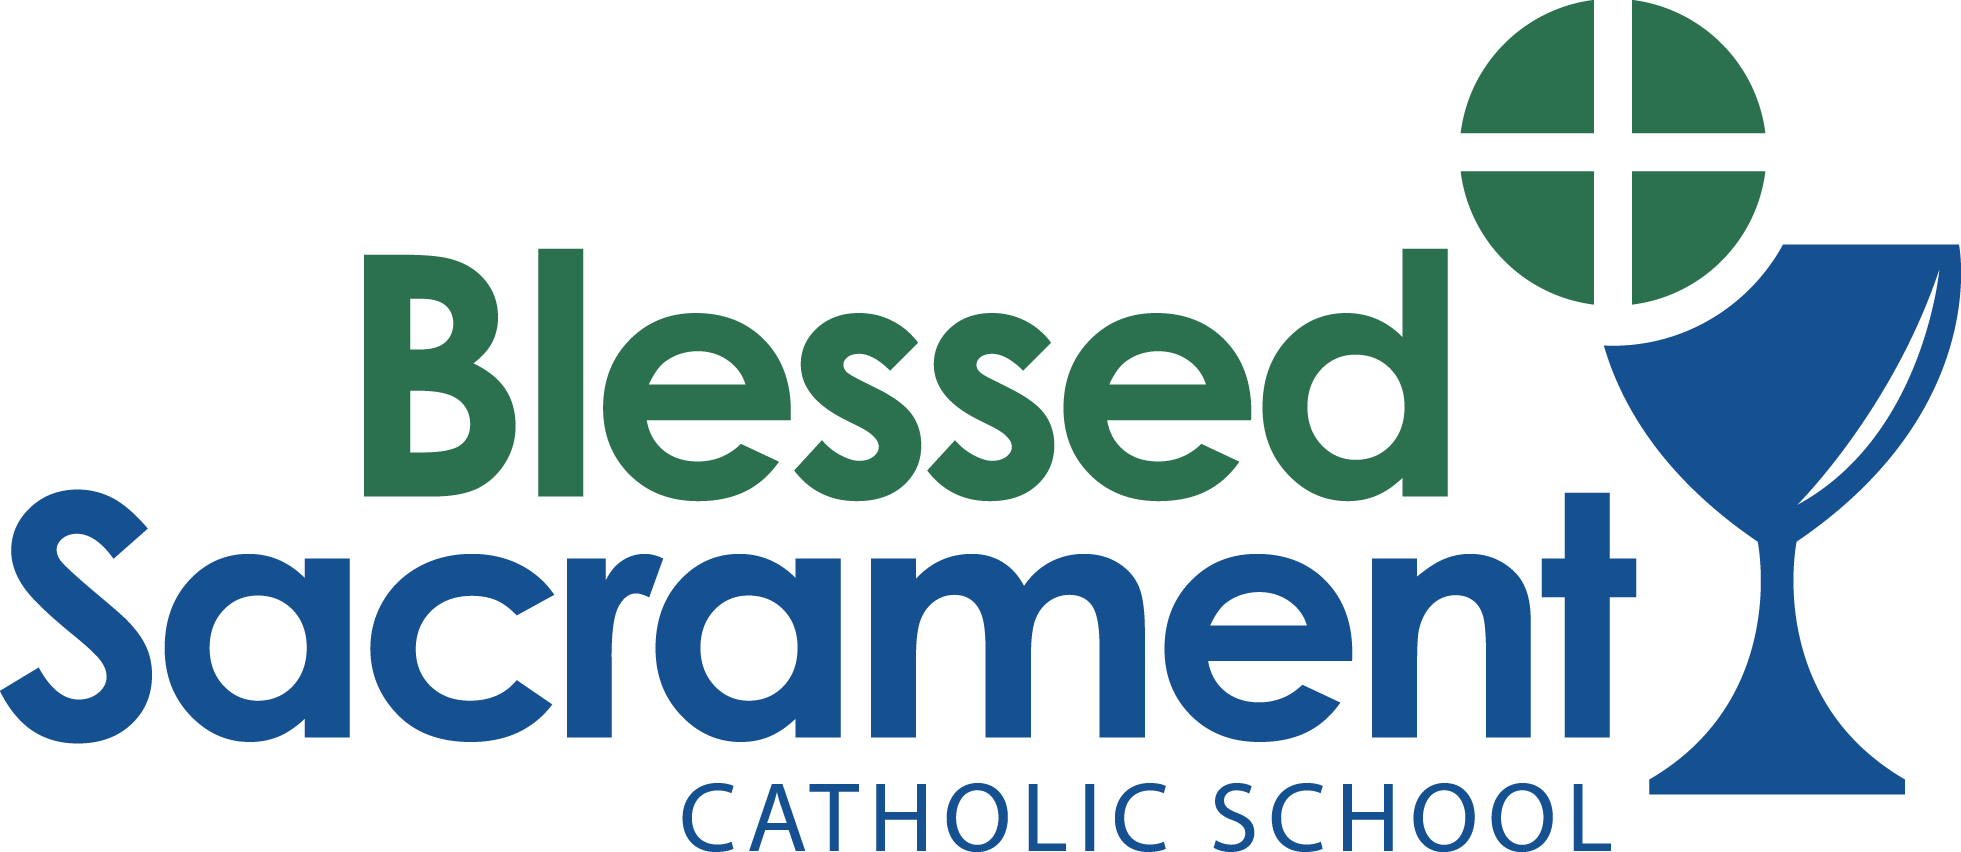 Logo for Blessed Sacarament Catholic School